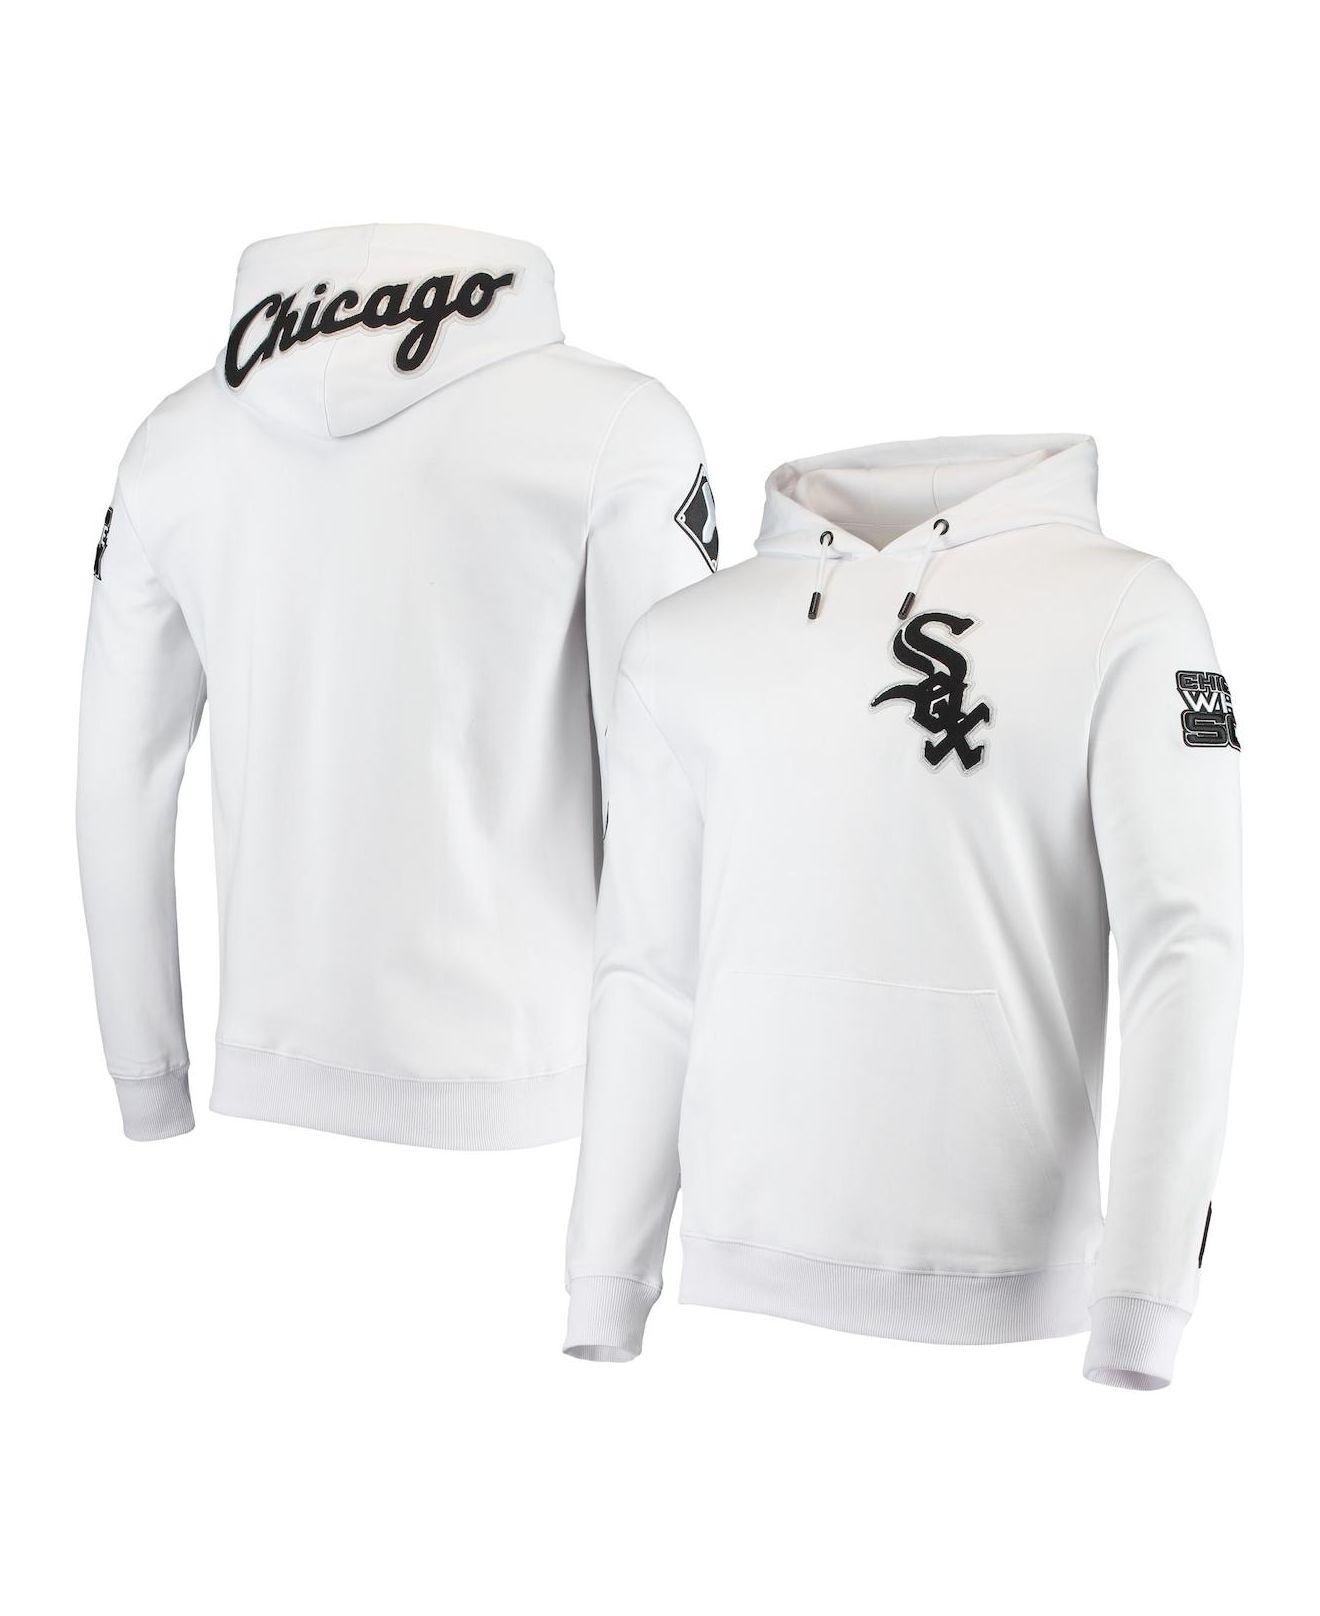 Chicago Bulls Pro Standard Women's City Scape Pullover Sweatshirt - White